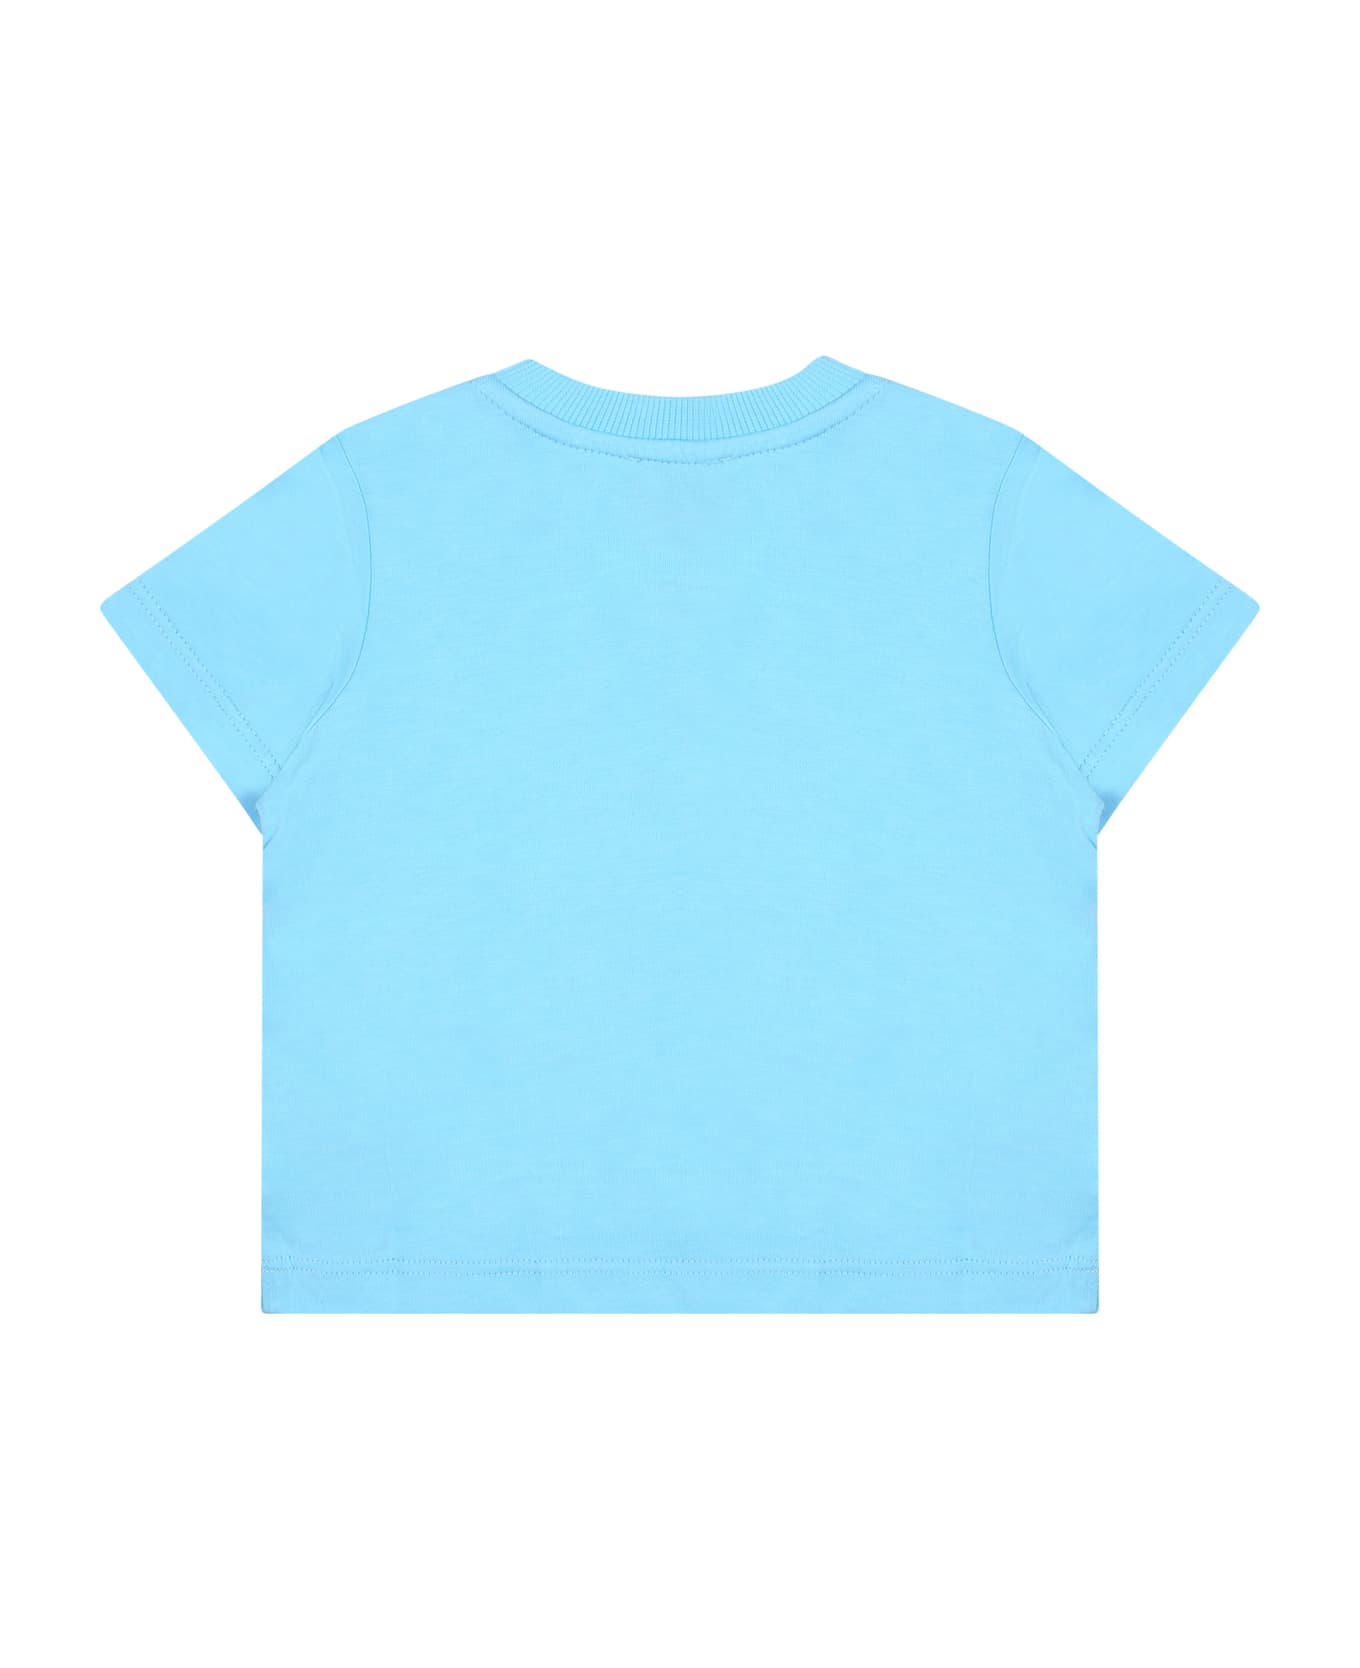 Moschino Light Blue T-shirt For Baby Boy With Teddy Bear - Light Blue